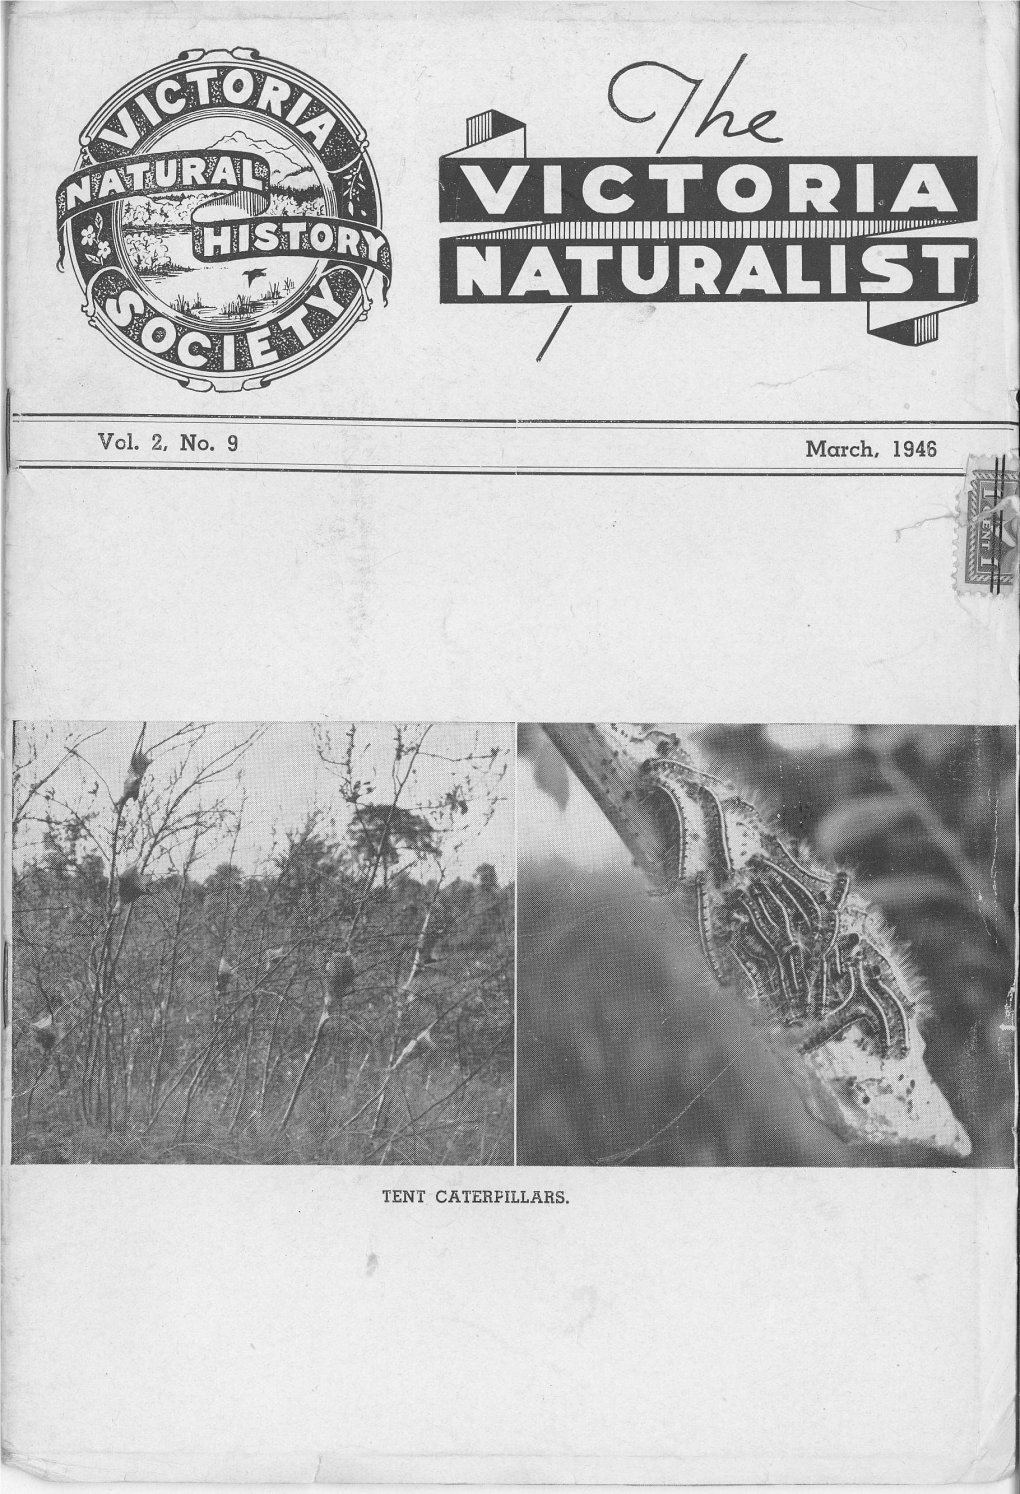 TENT CATERPILLARS. 135 the "VICTORIA NATURALIST Published by the Victoria Natural History Society